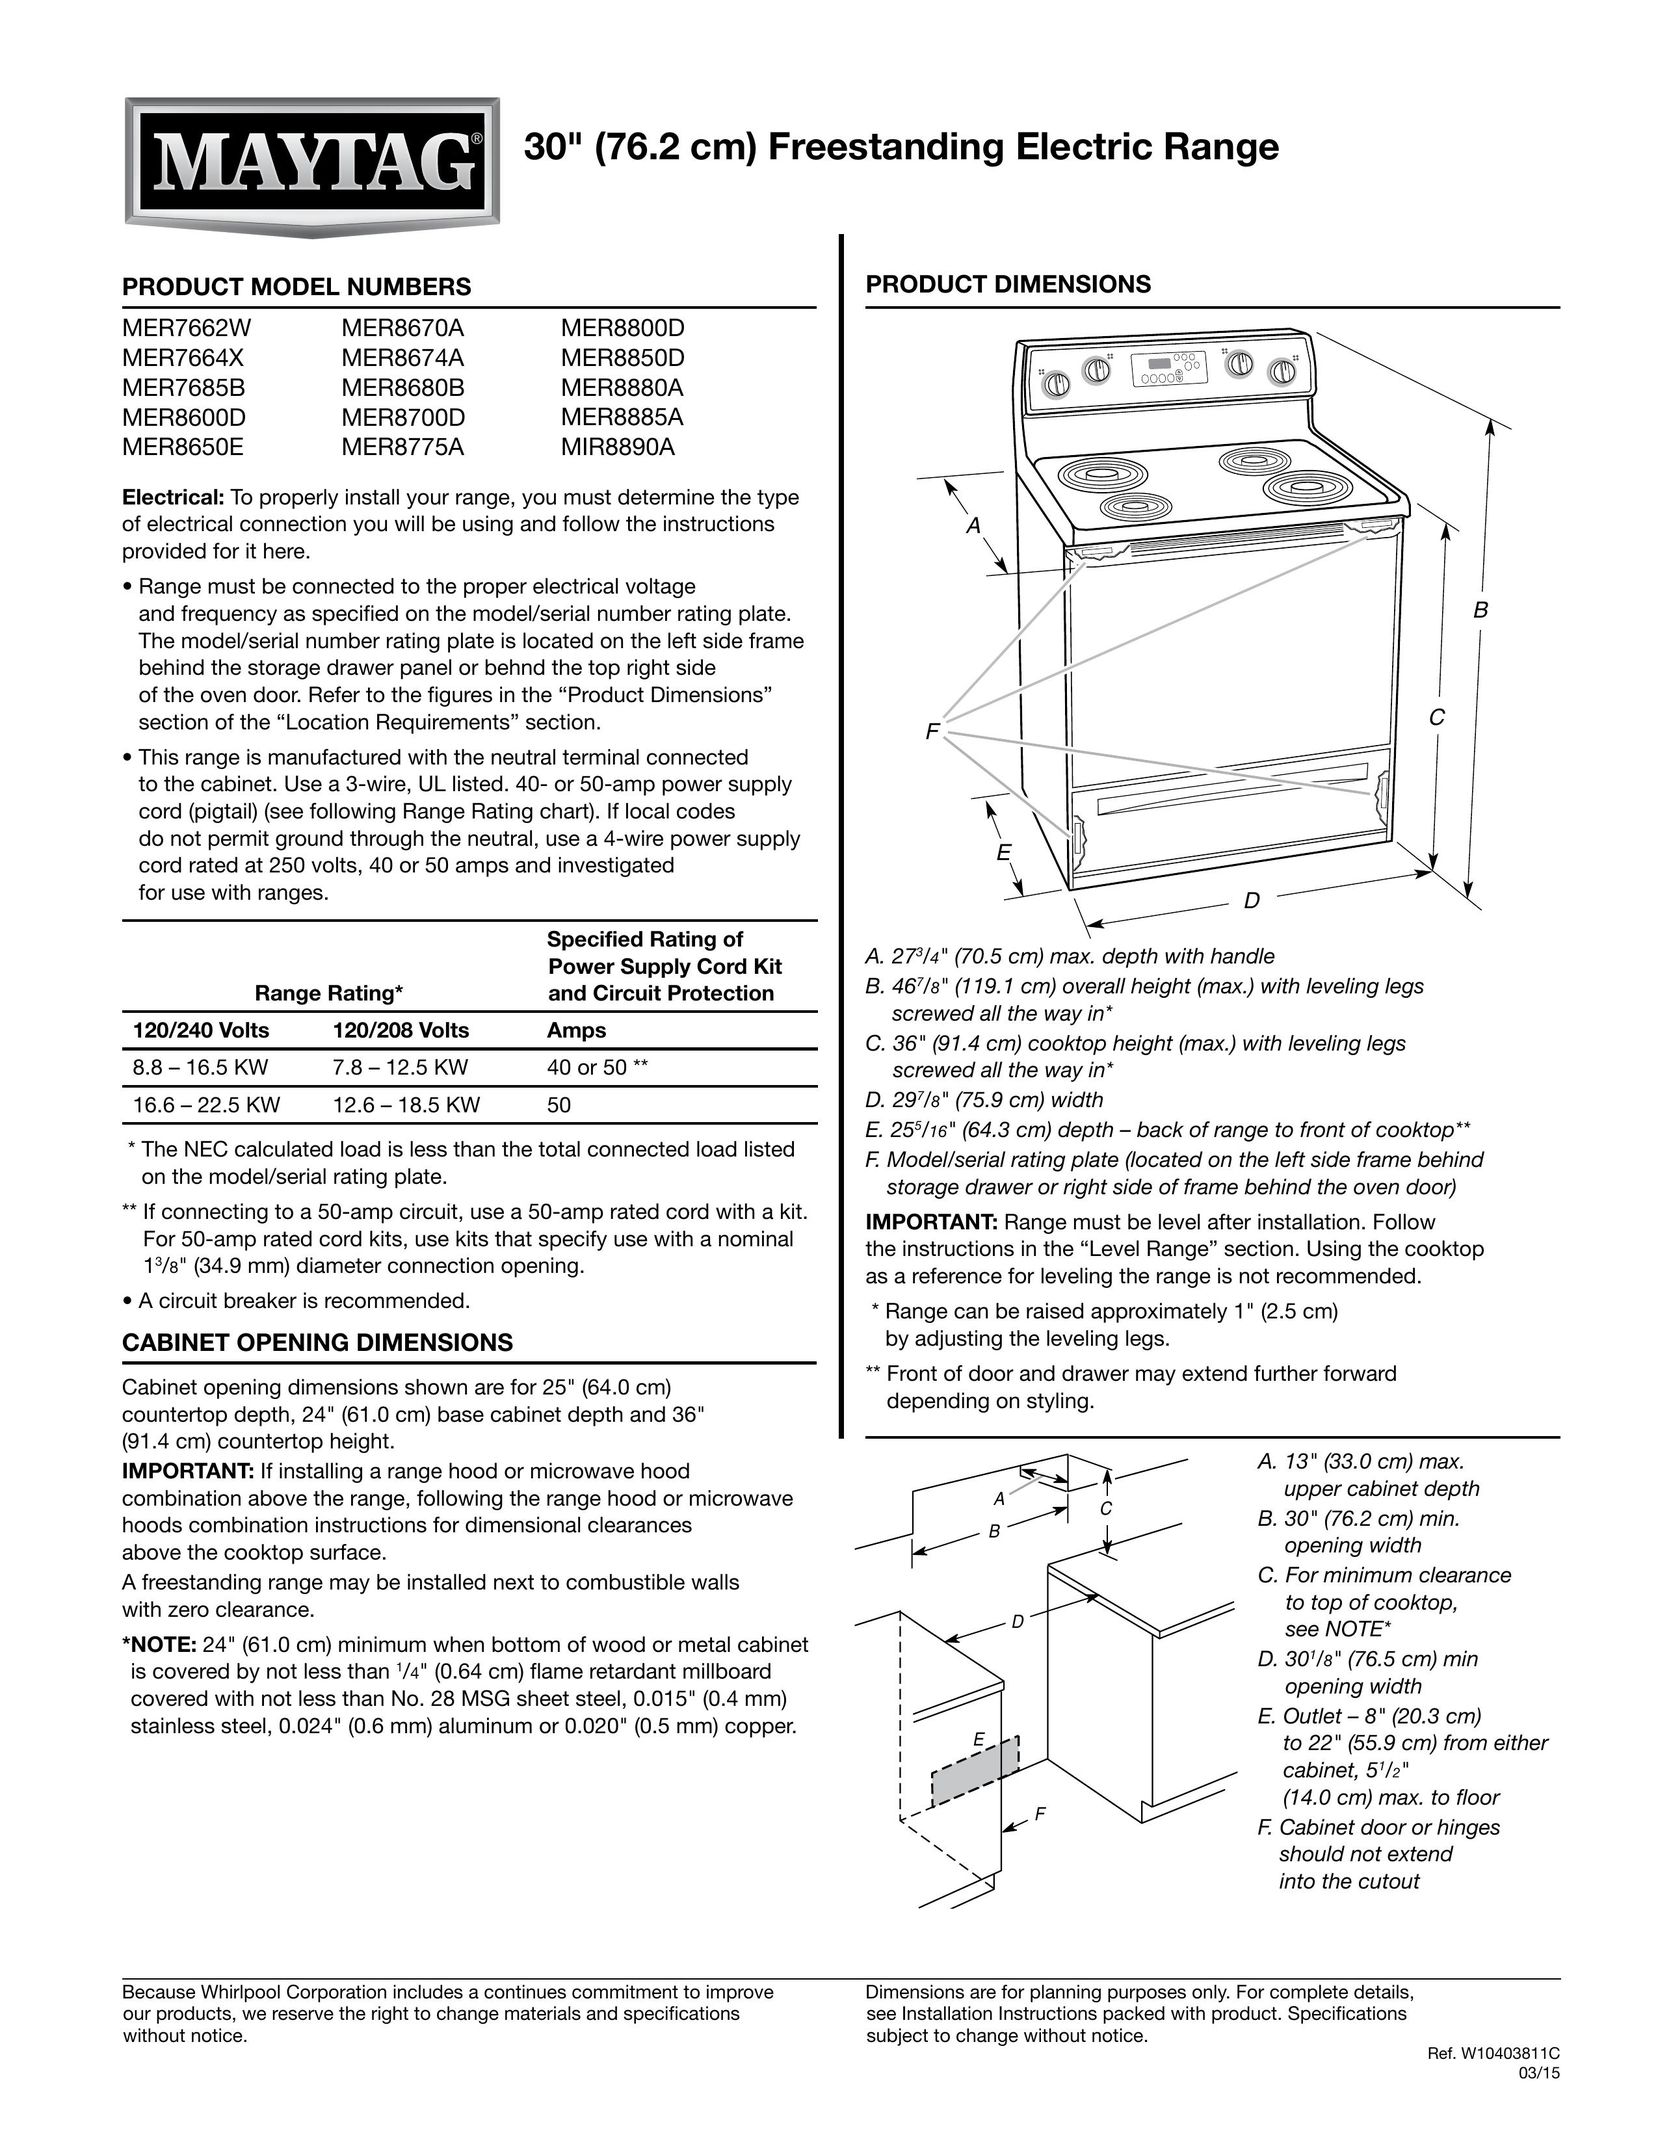 Maytag MER7685B Cooktop User Manual